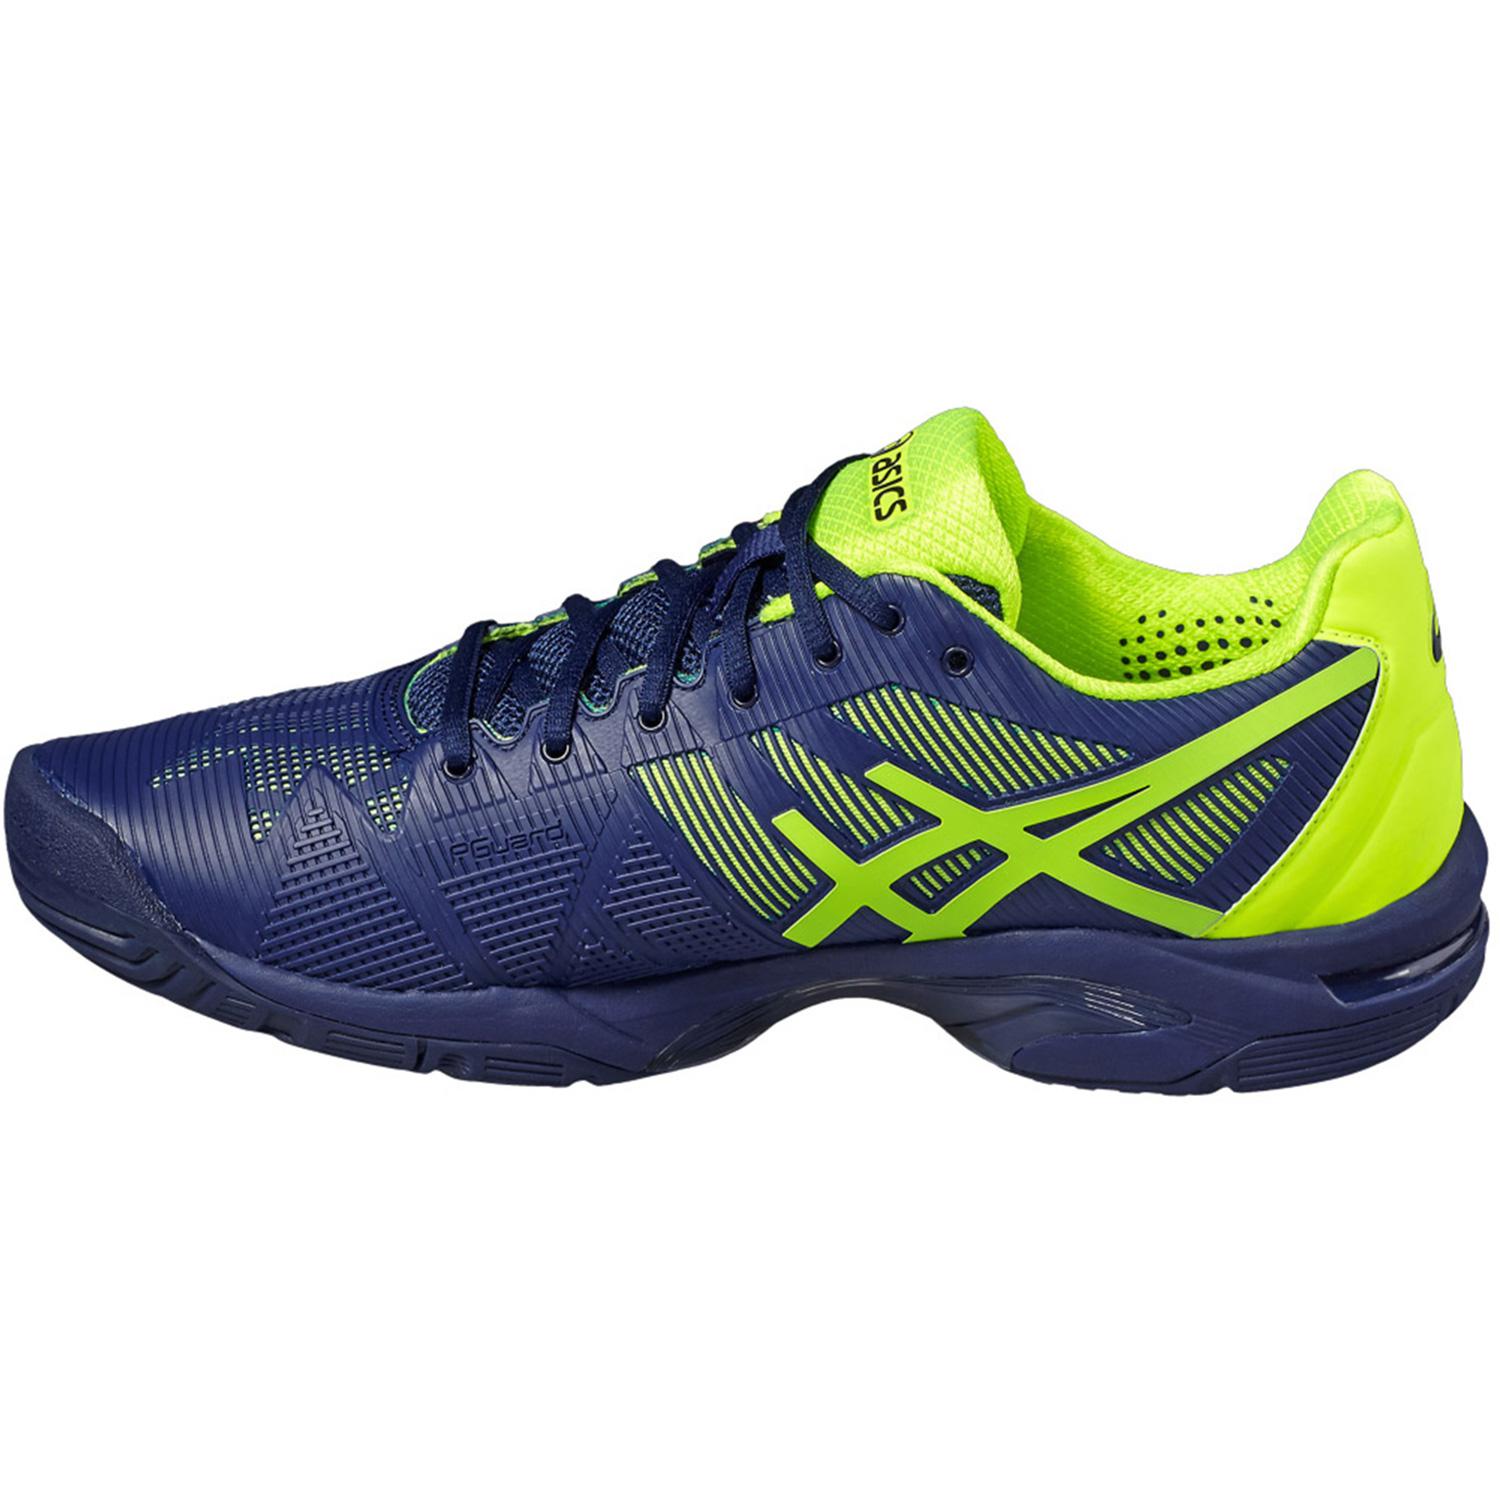 Asics Mens GEL-Solution Speed 3 Tennis Shoes - Blue/Yellow - Tennisnuts.com